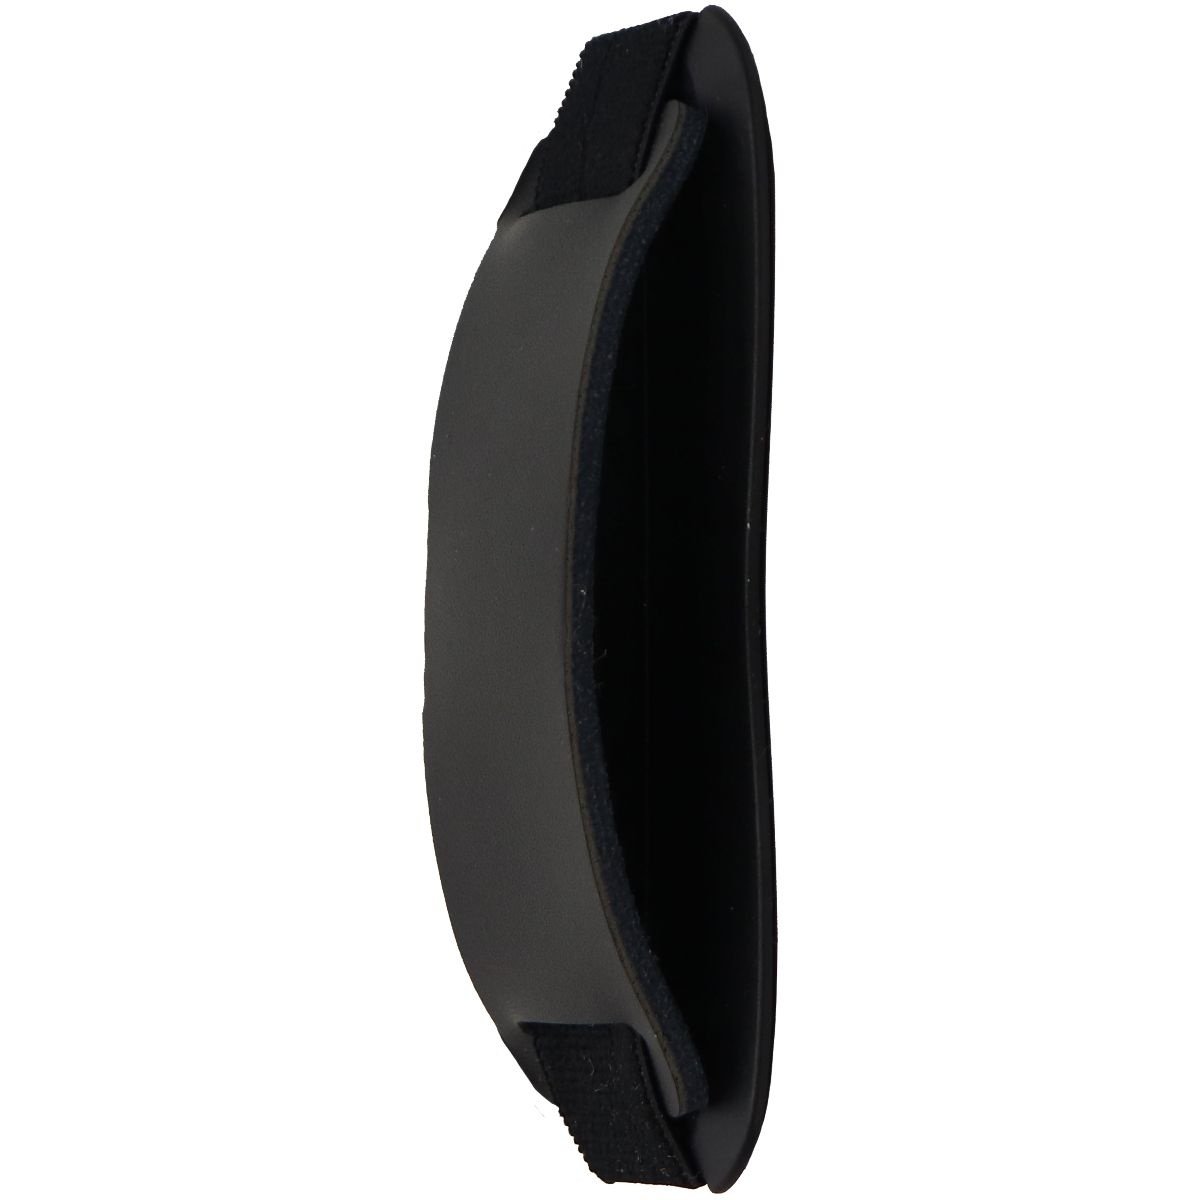 Nimbus9 Universal Smartphone Leather Grip & Stand - Black